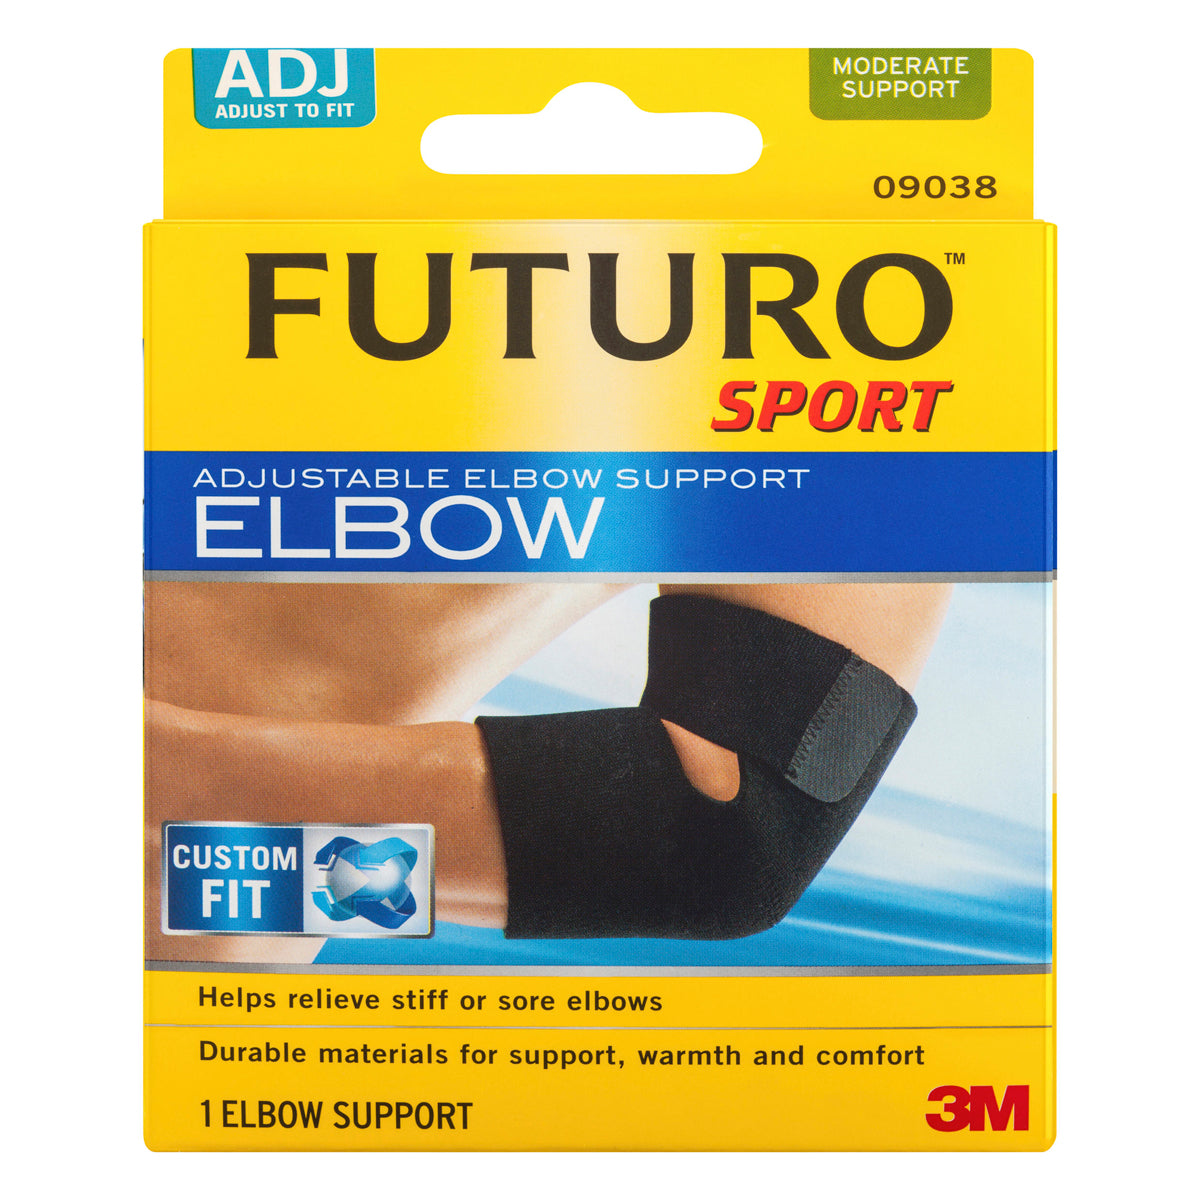 Sports Elbow Brace Shop Sports Elbow Braces